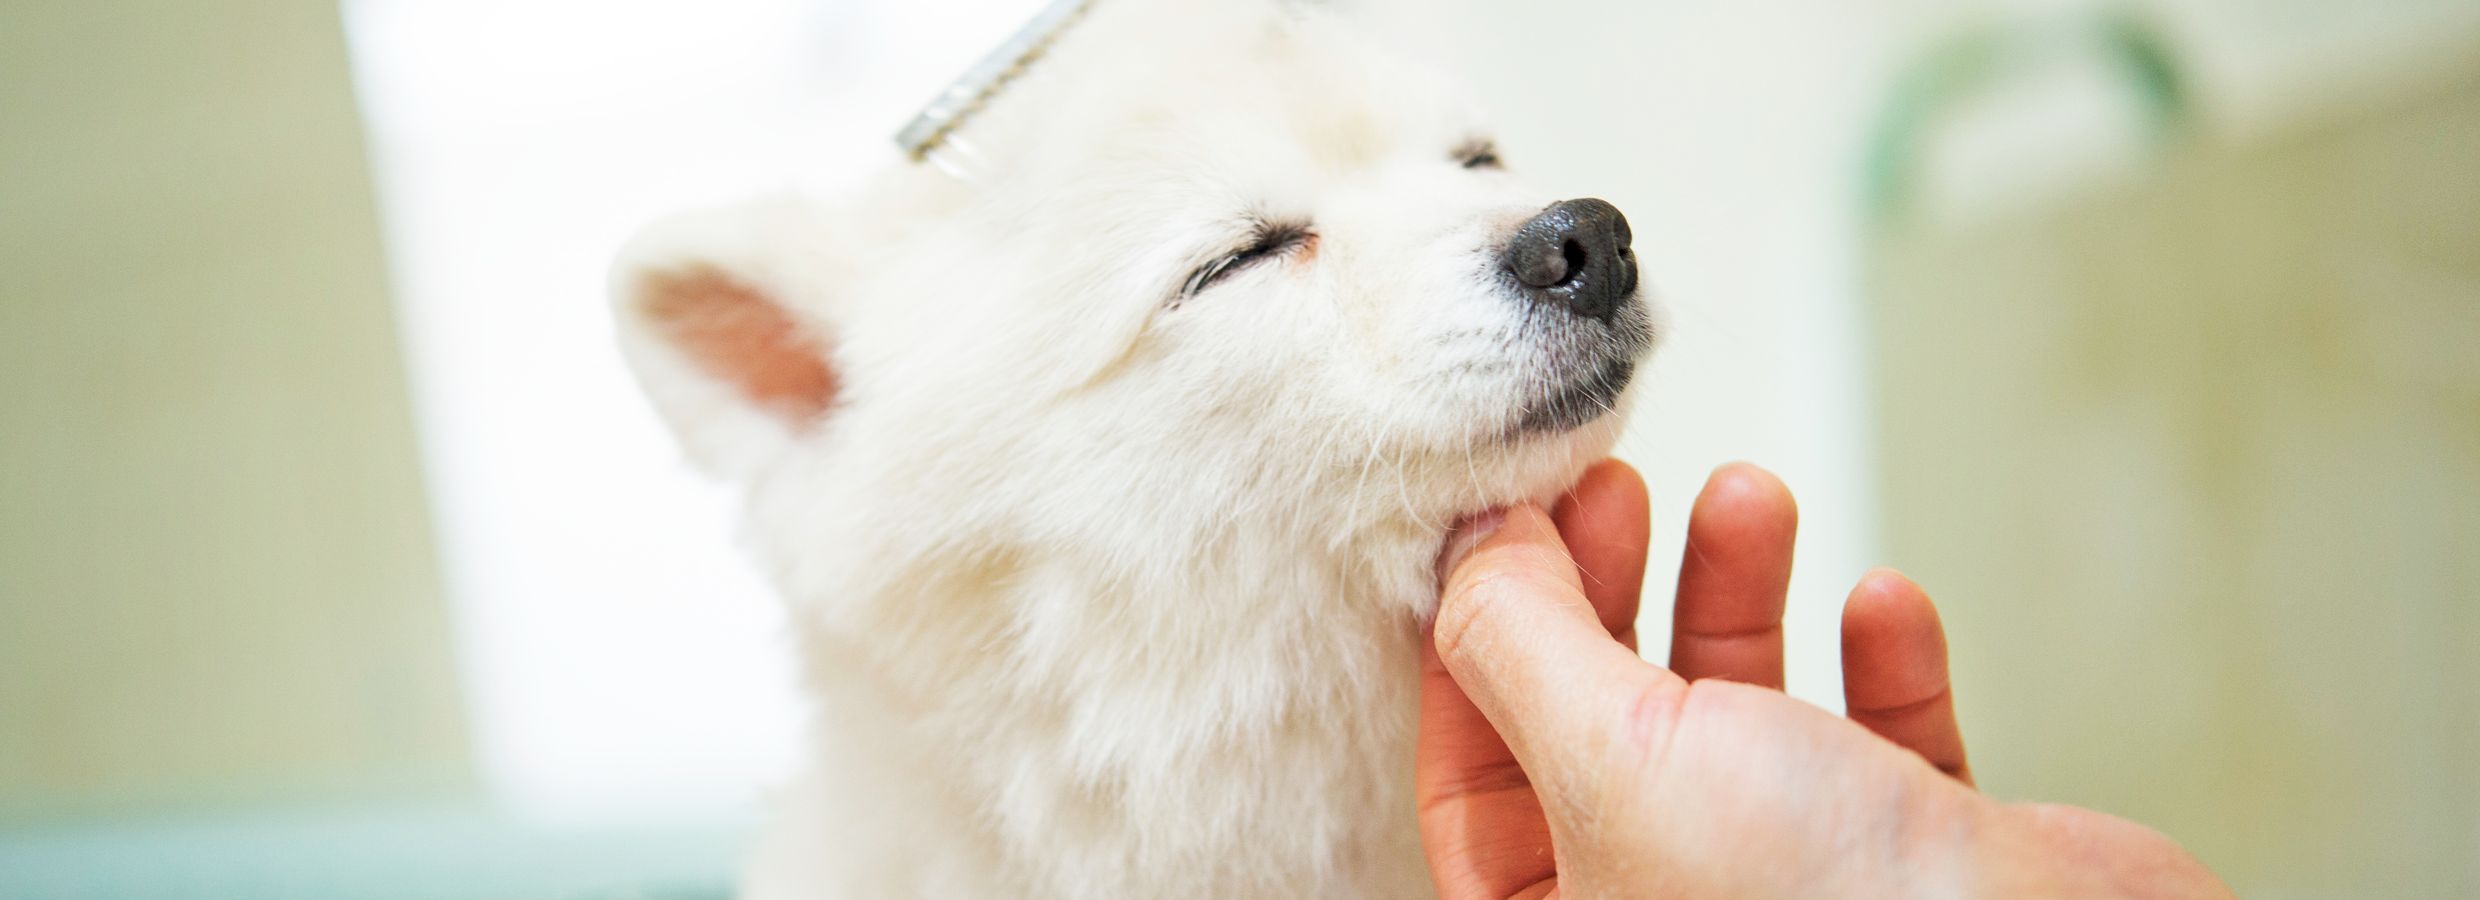 how do you detangle a dogs hair naturally